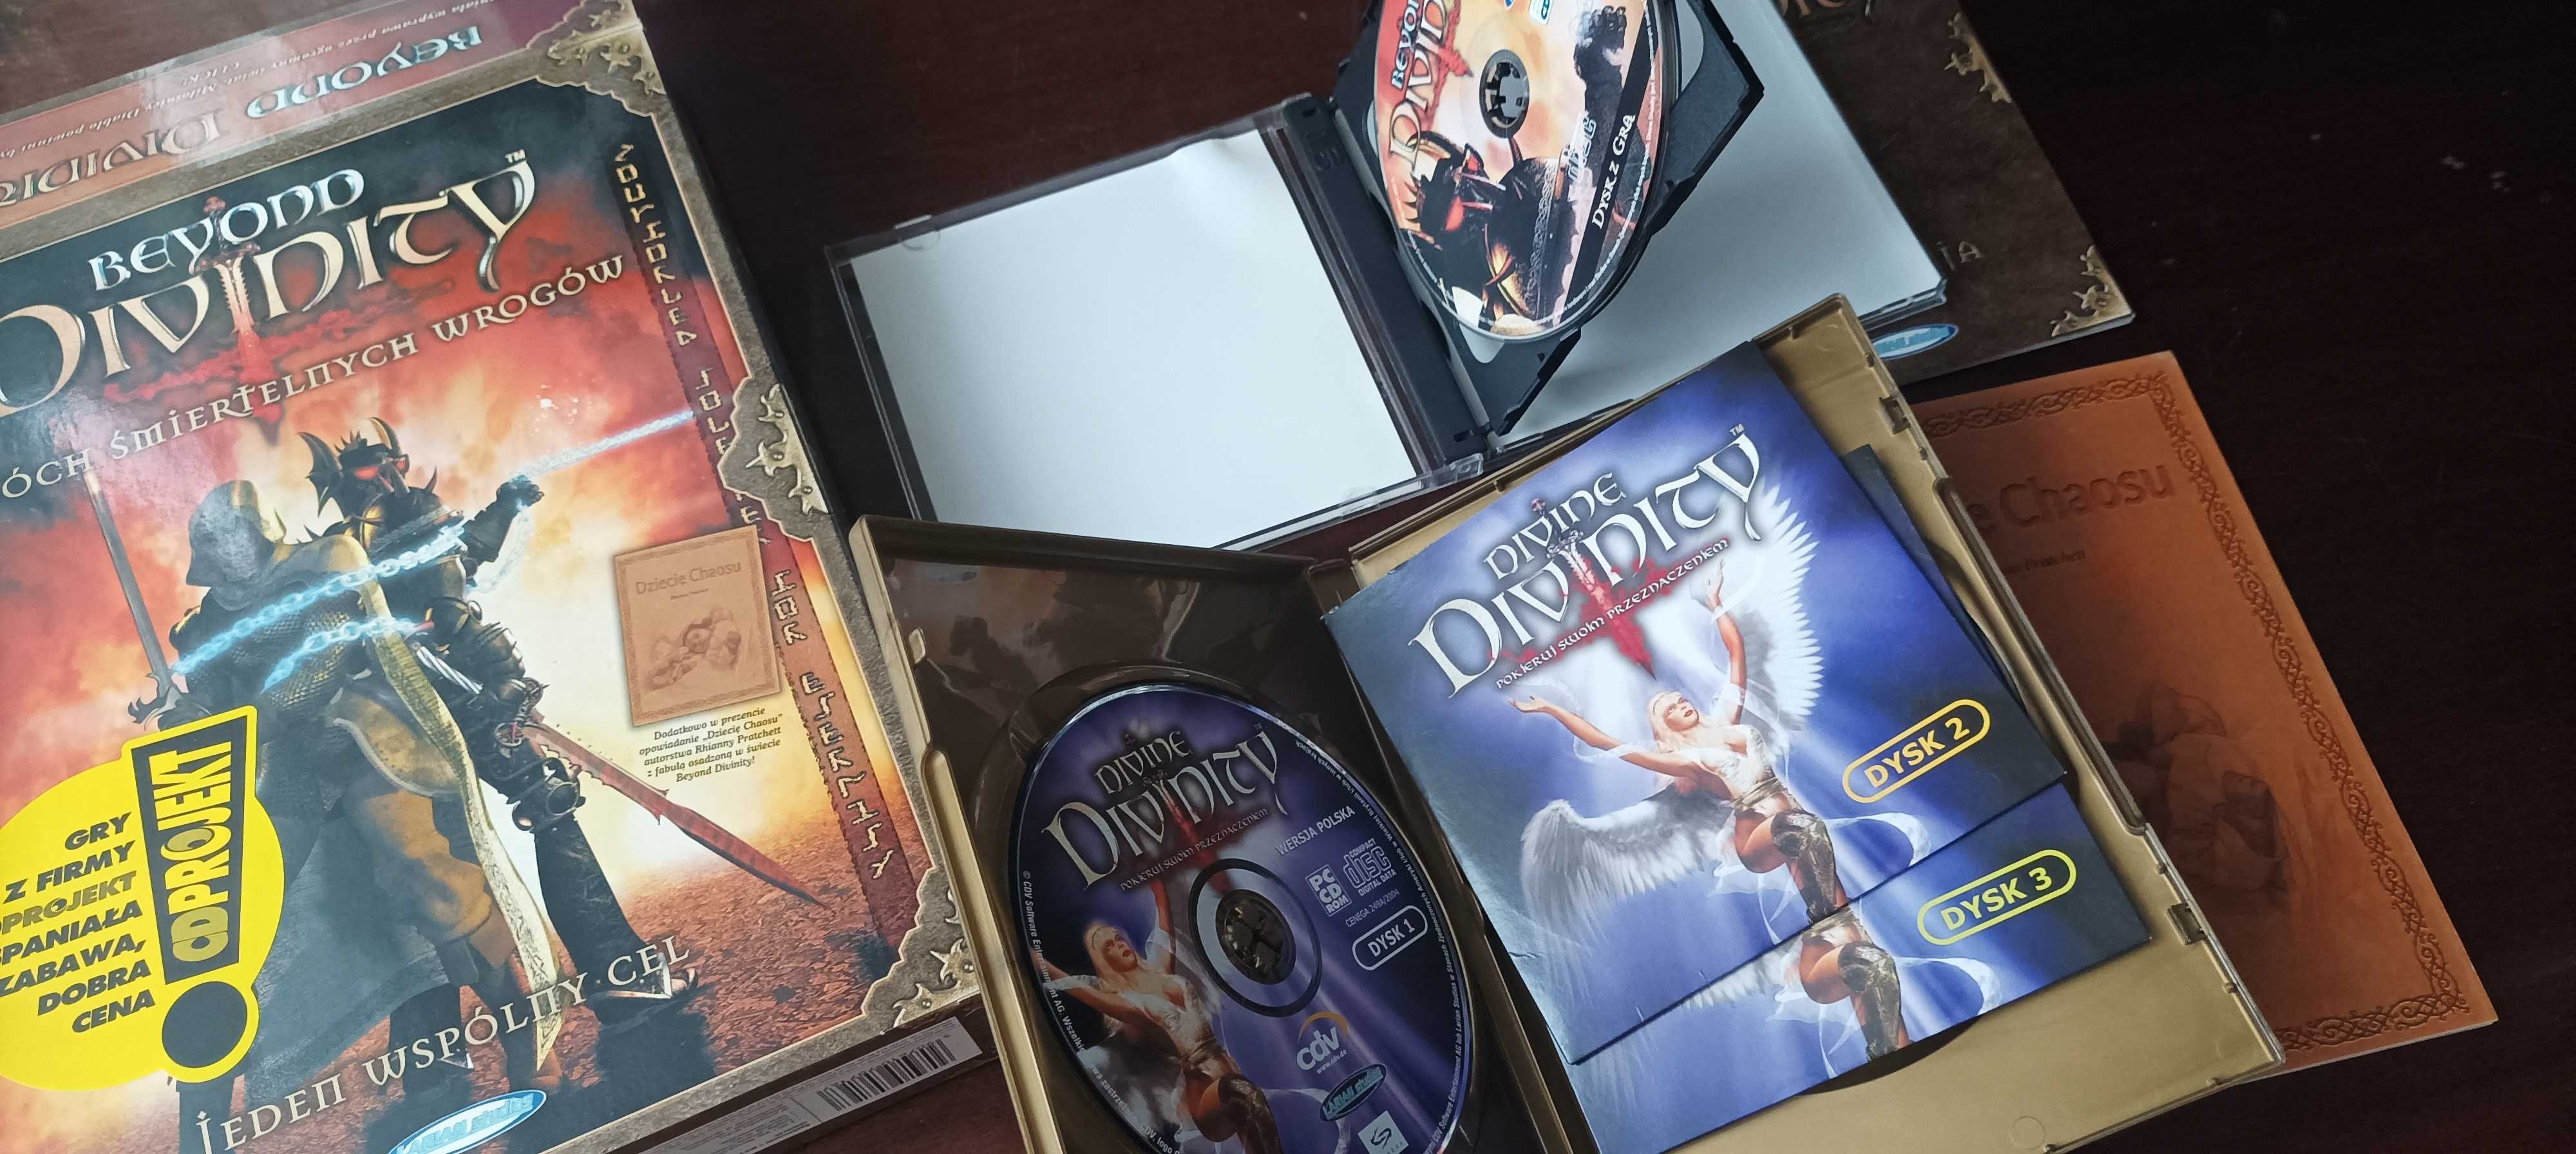 Beyond Divinity + DVD Box Divine Divinity duże pudełko box unikat PC